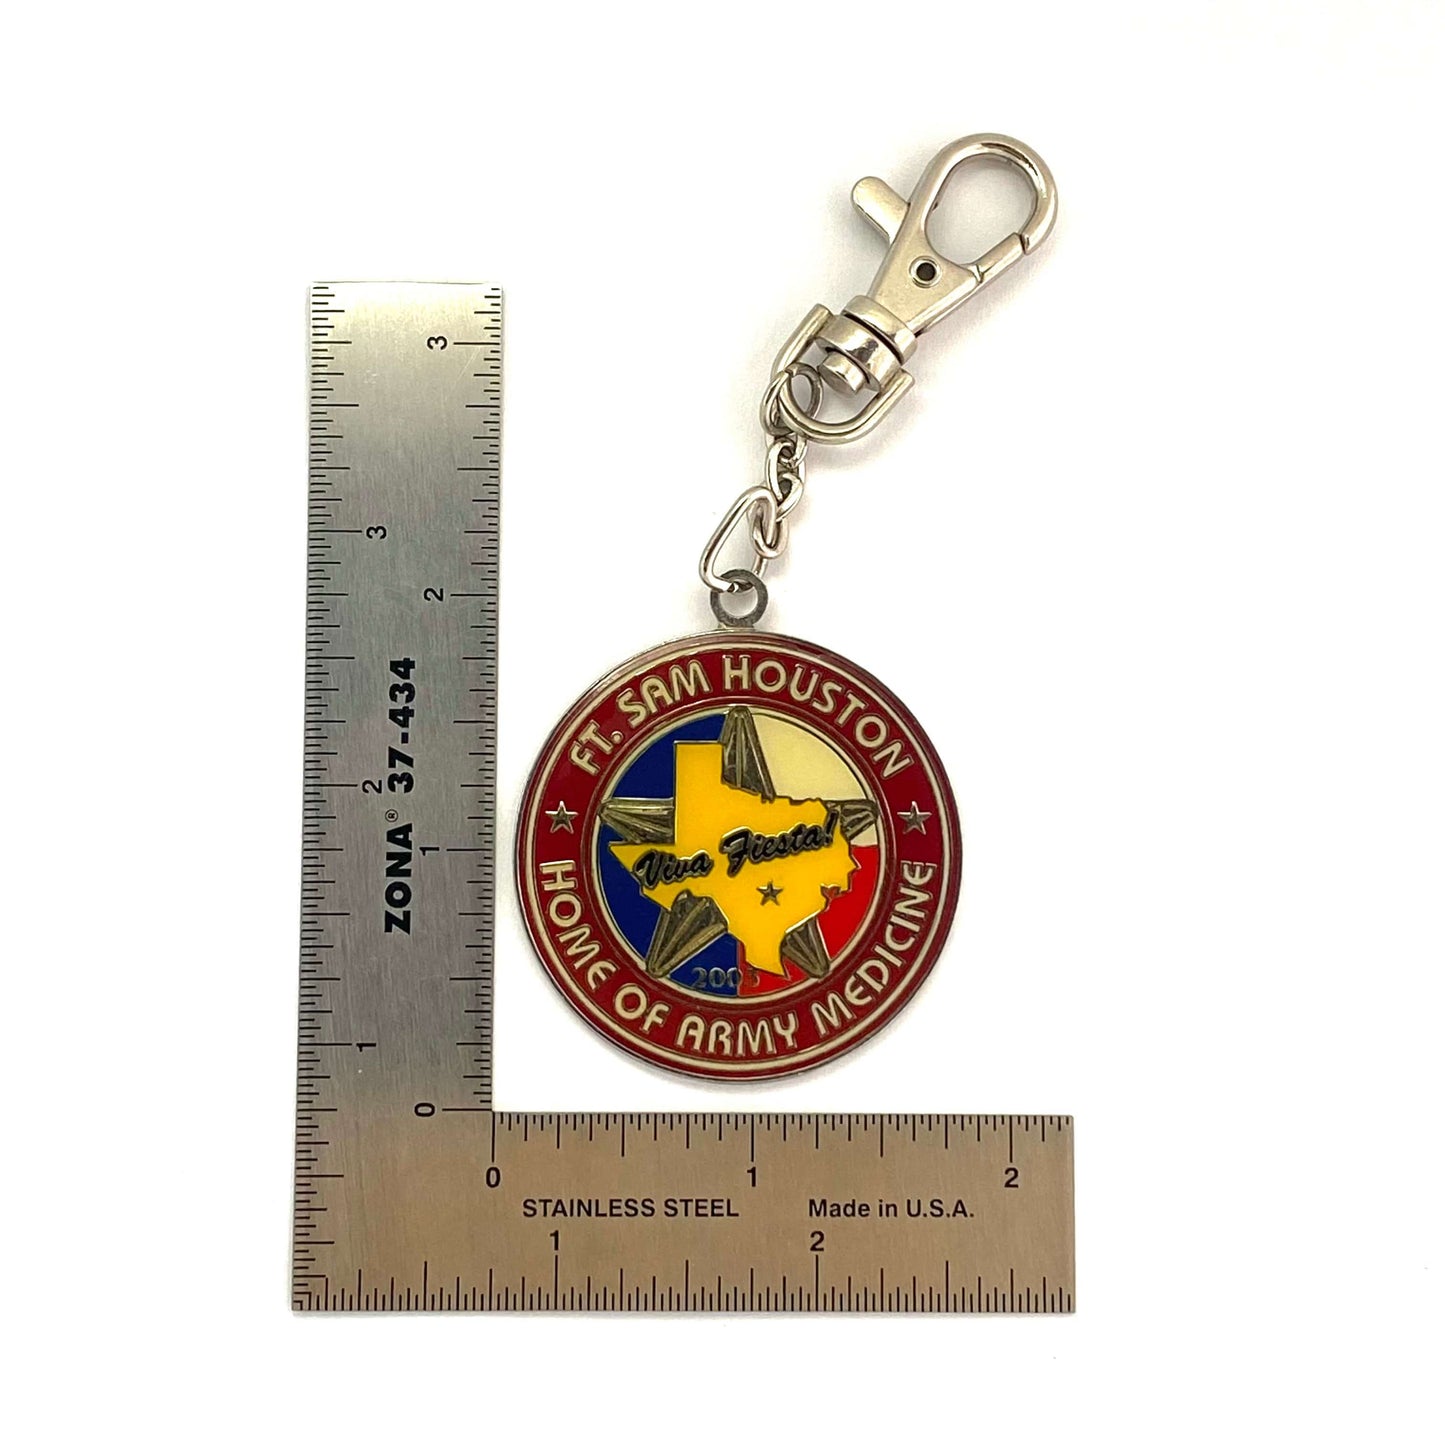 “Ft. Sam Houston - Home of Army Medicine” Silvertone Metal Souvenir Keychain Key Ring Charm